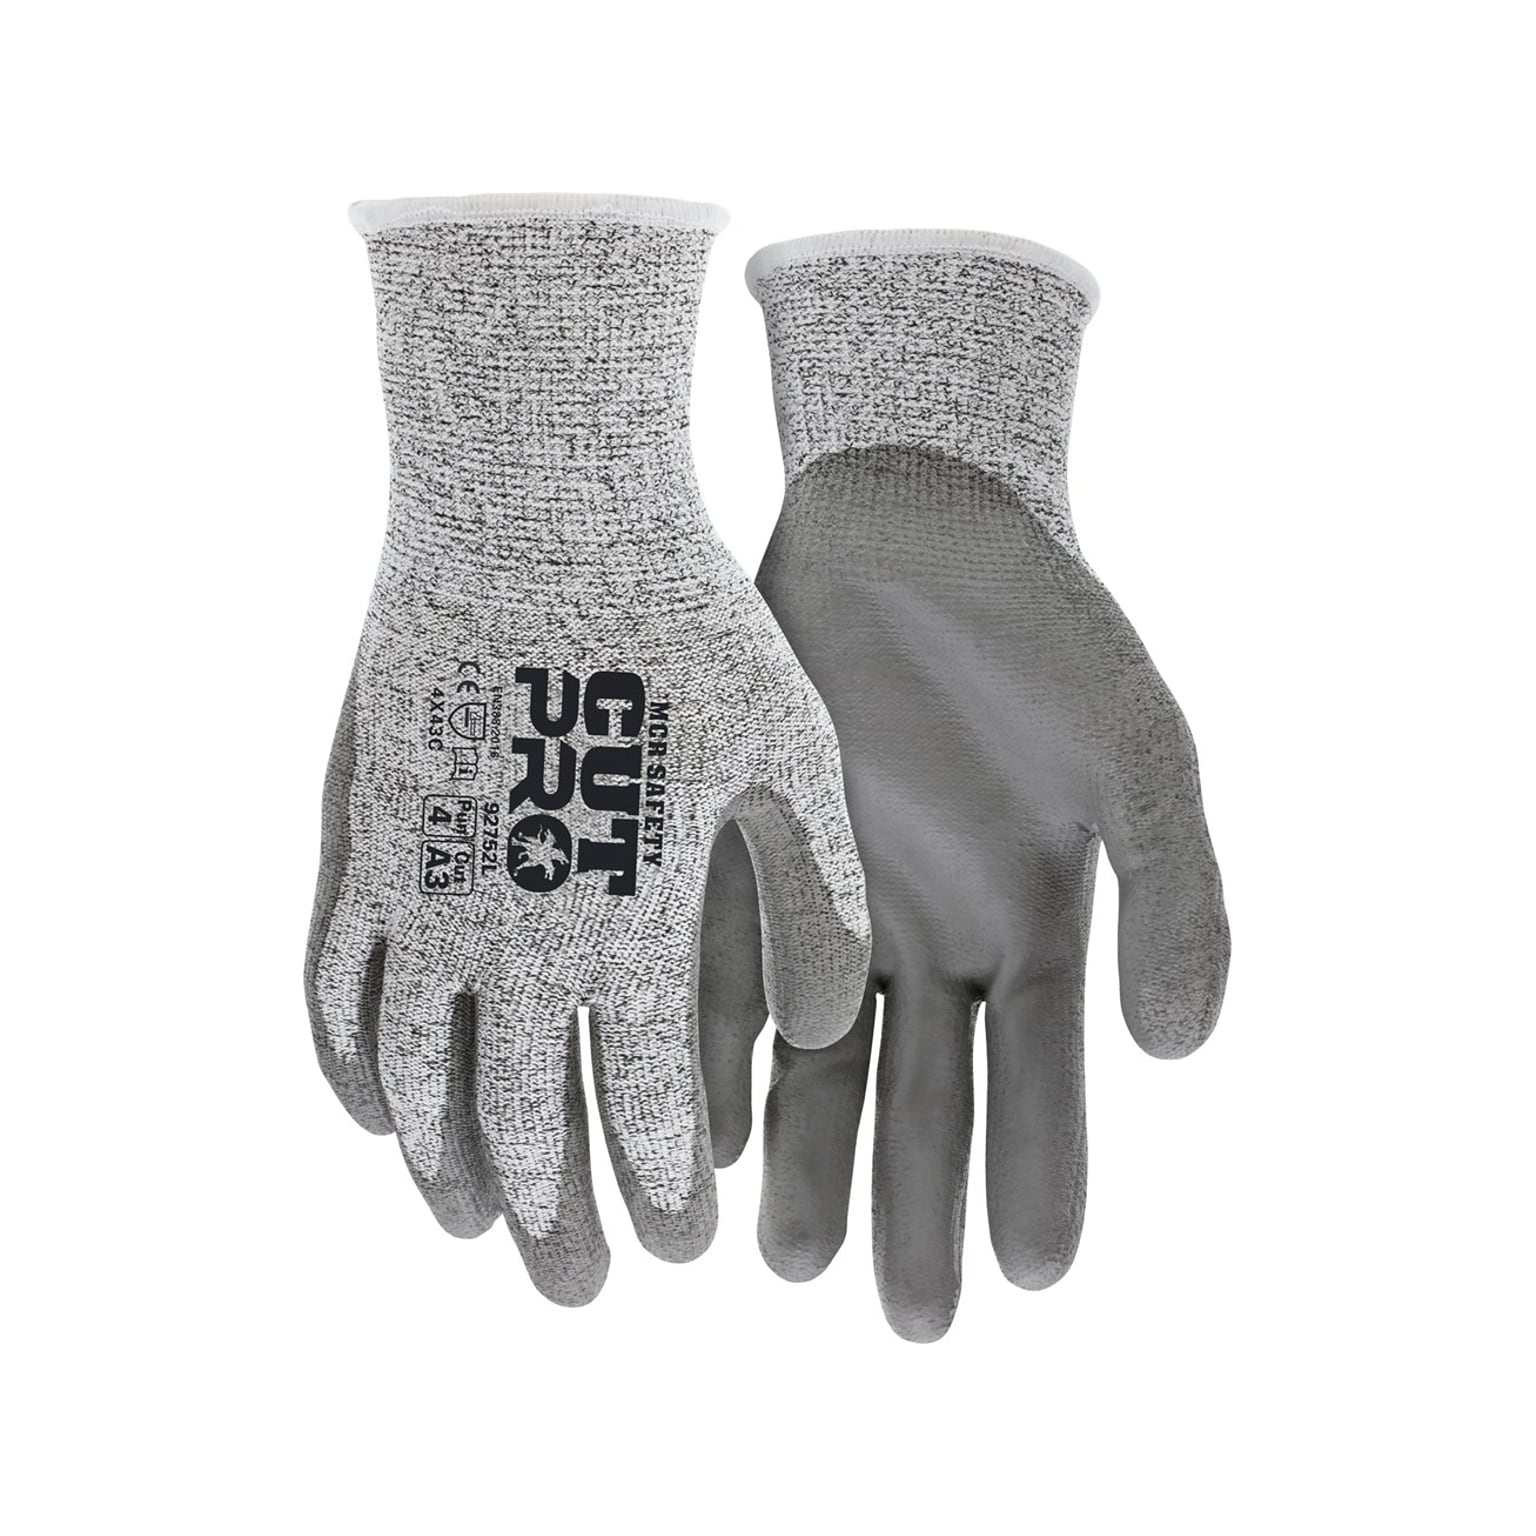 MCR Safety Cut Pro Hypermax Fiber/Polyurethane Work Gloves, X-Large, A3 Cut Level, Salt-and-Pepper/Gray, Dozen (92752XL)